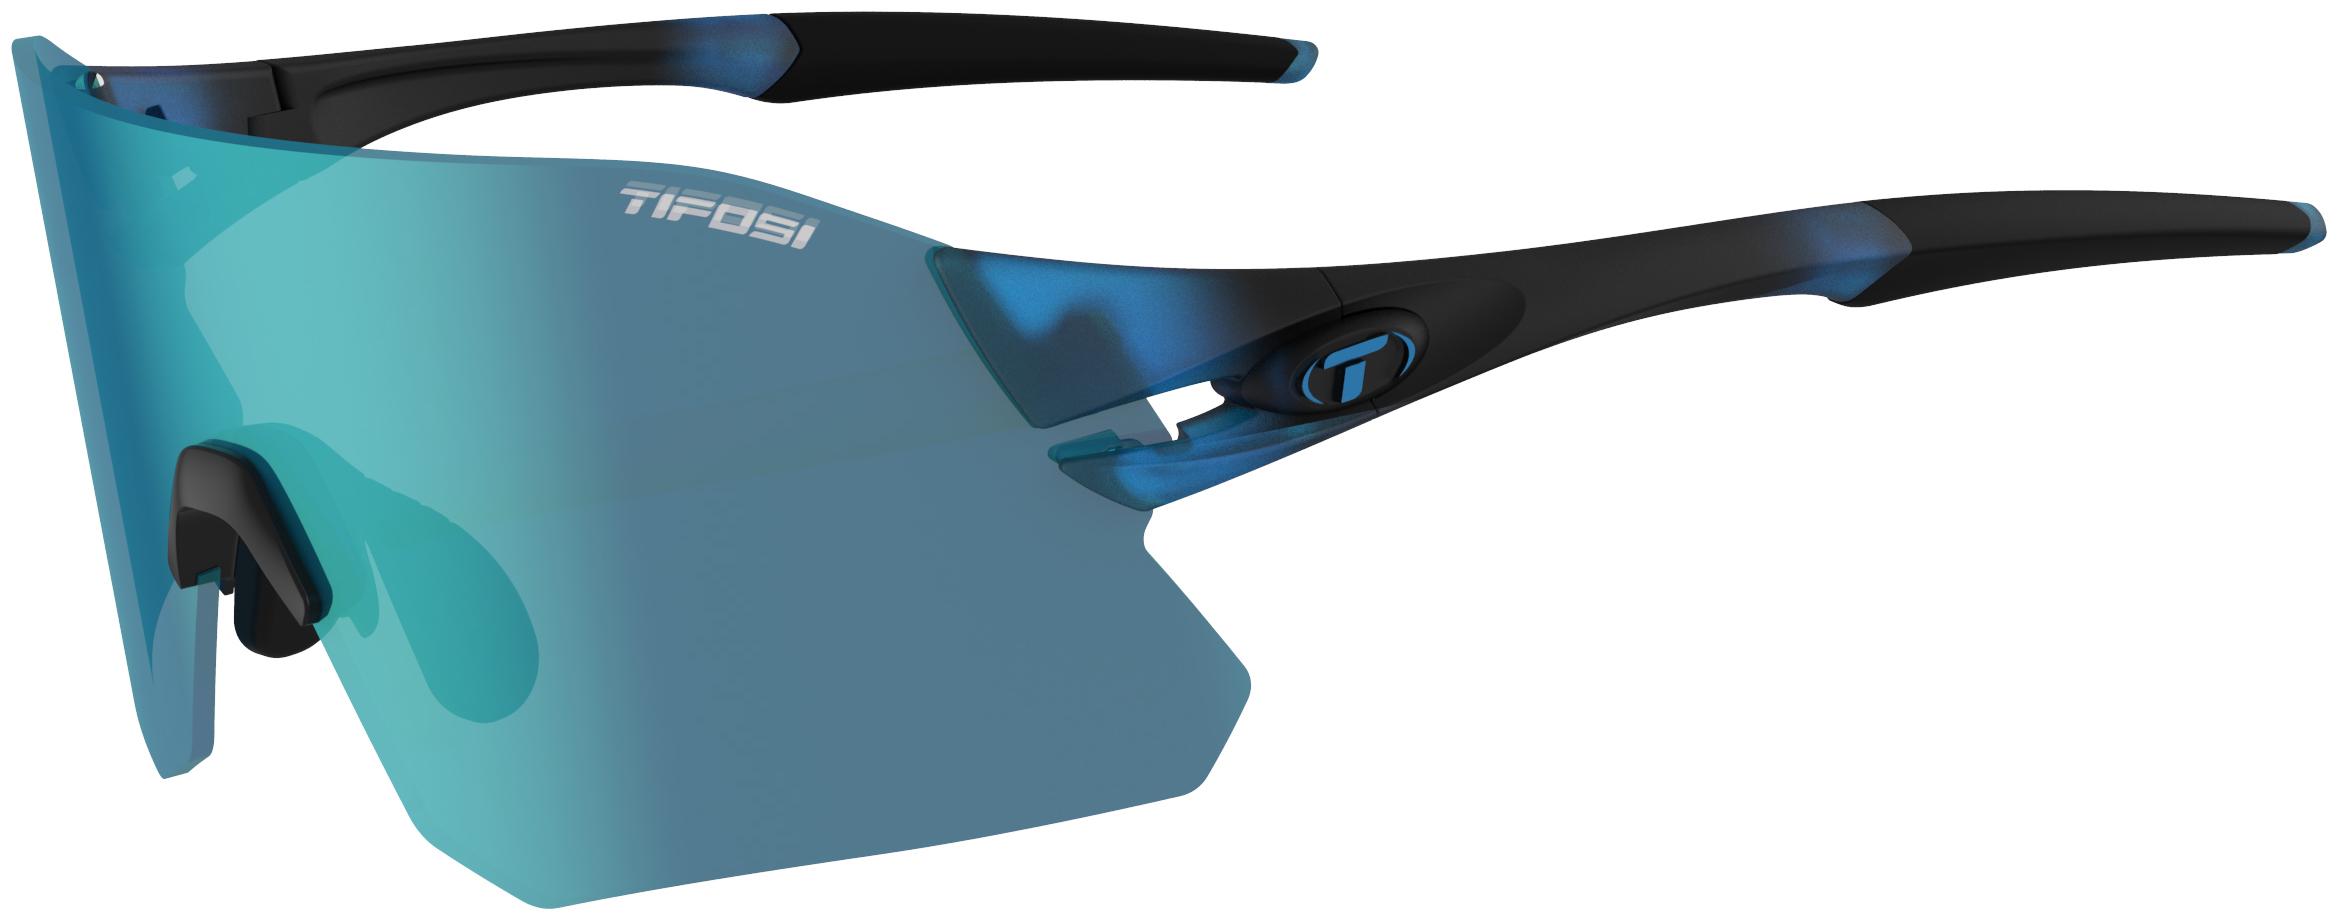 Tifosi Eyewear Rail Interchangeable Lens Sunglasses - Crystal Blue